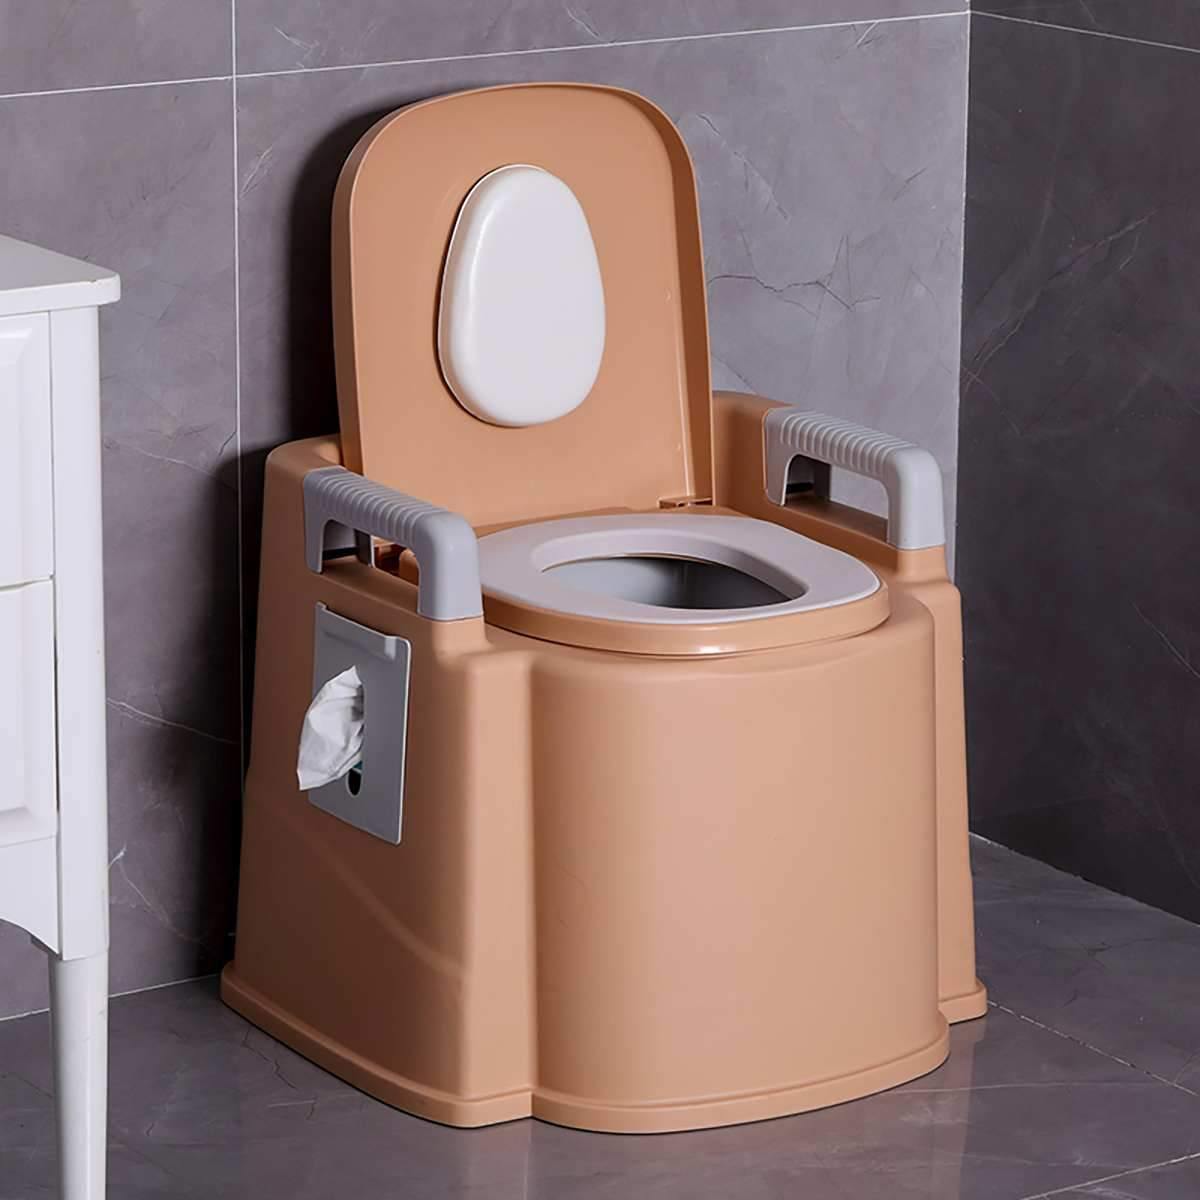 Portable Travel Lightweight Elderly Toilet - MaviGadget